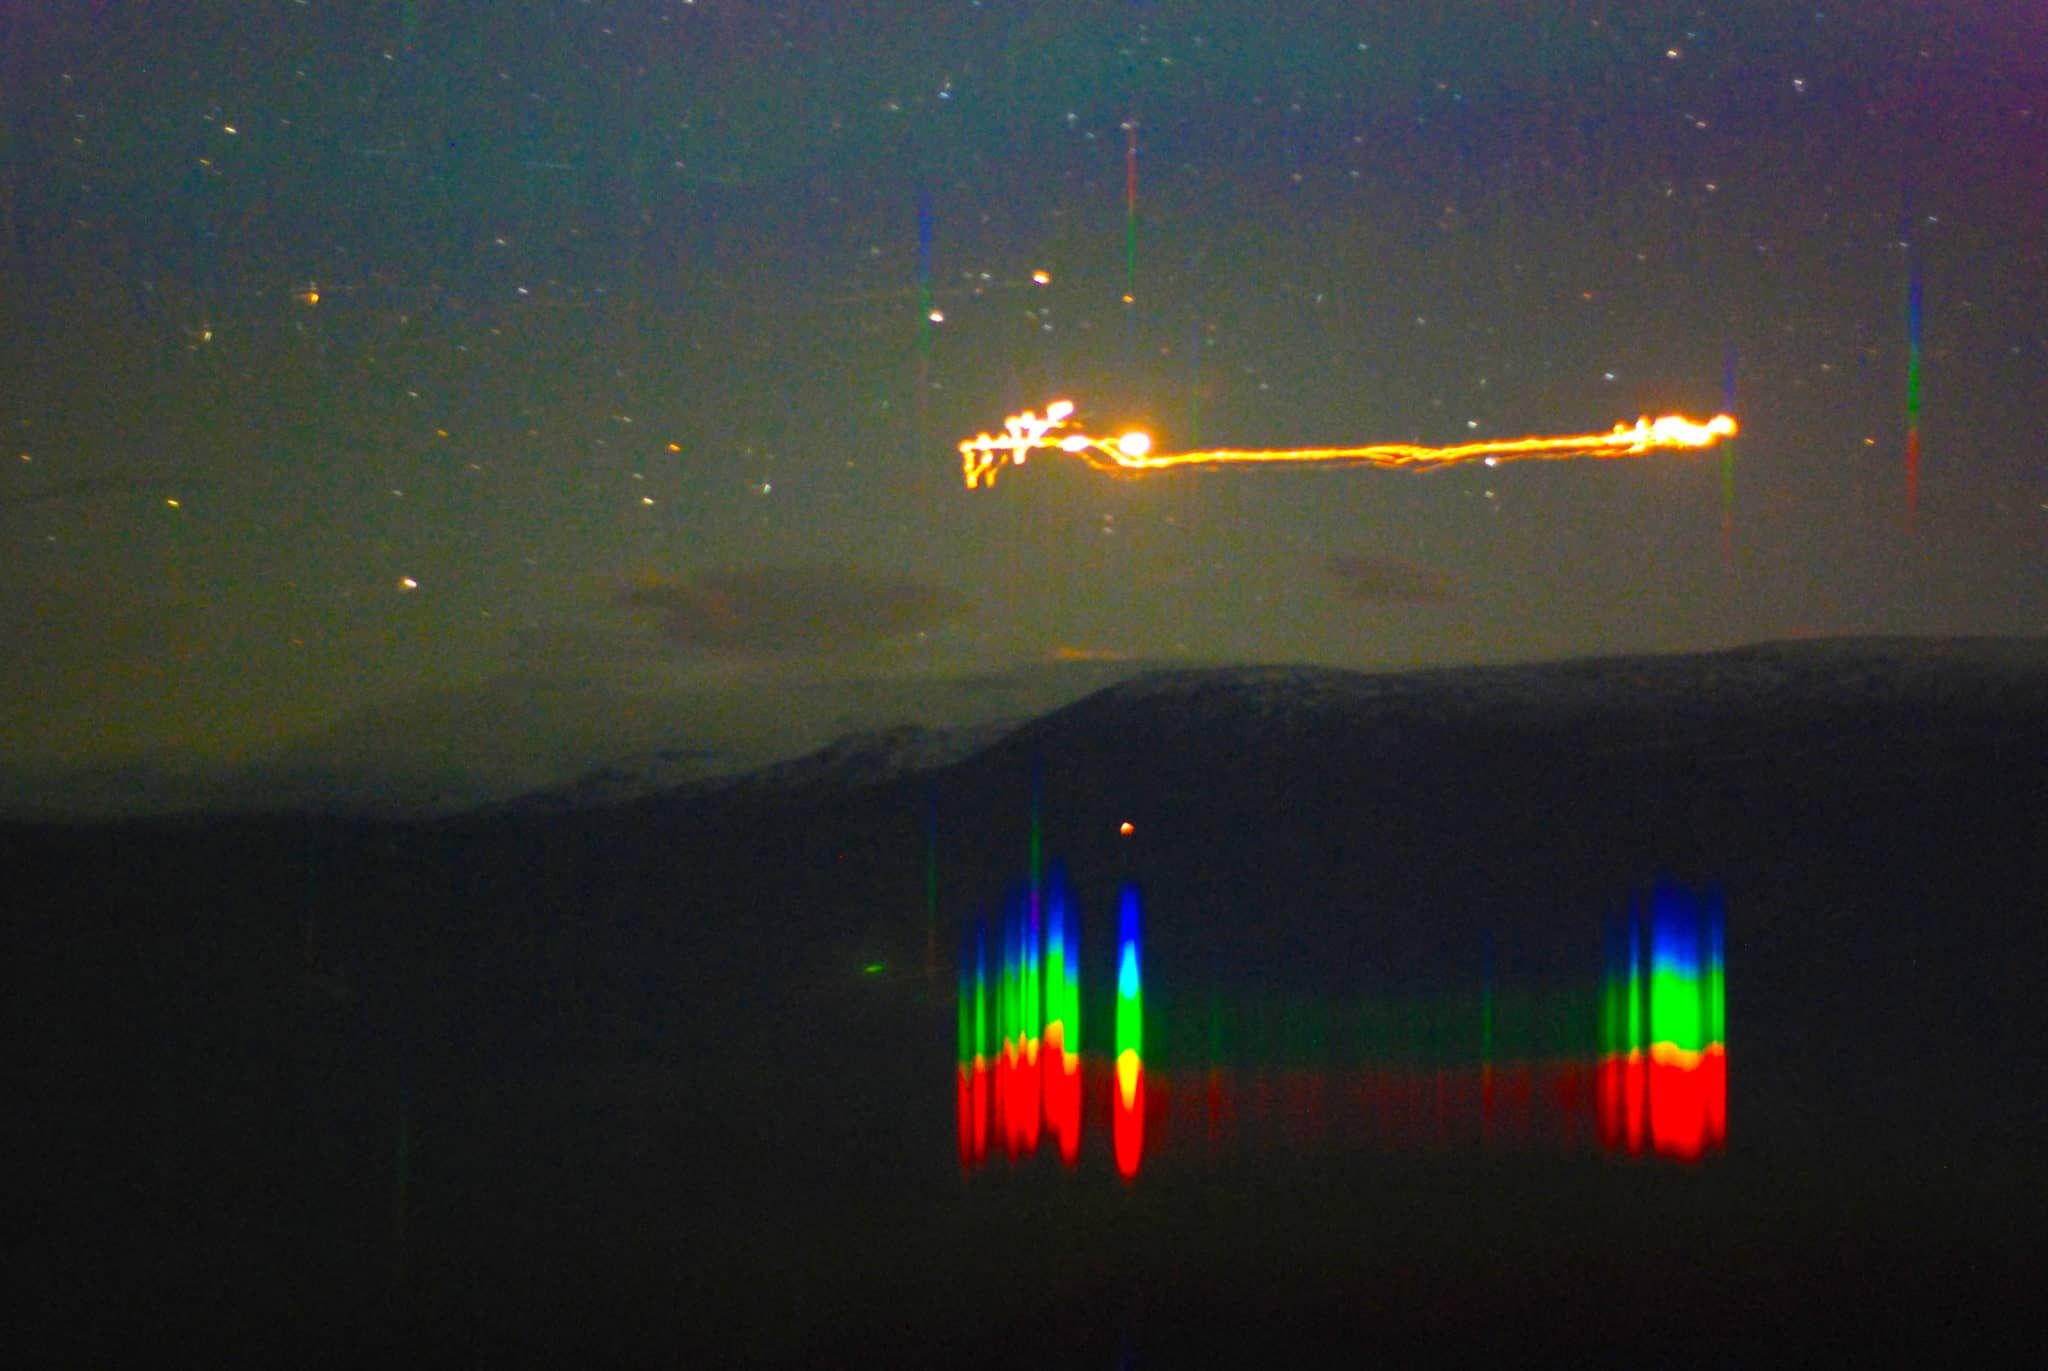 Hessdalen Lights, mysterious natural phenomena